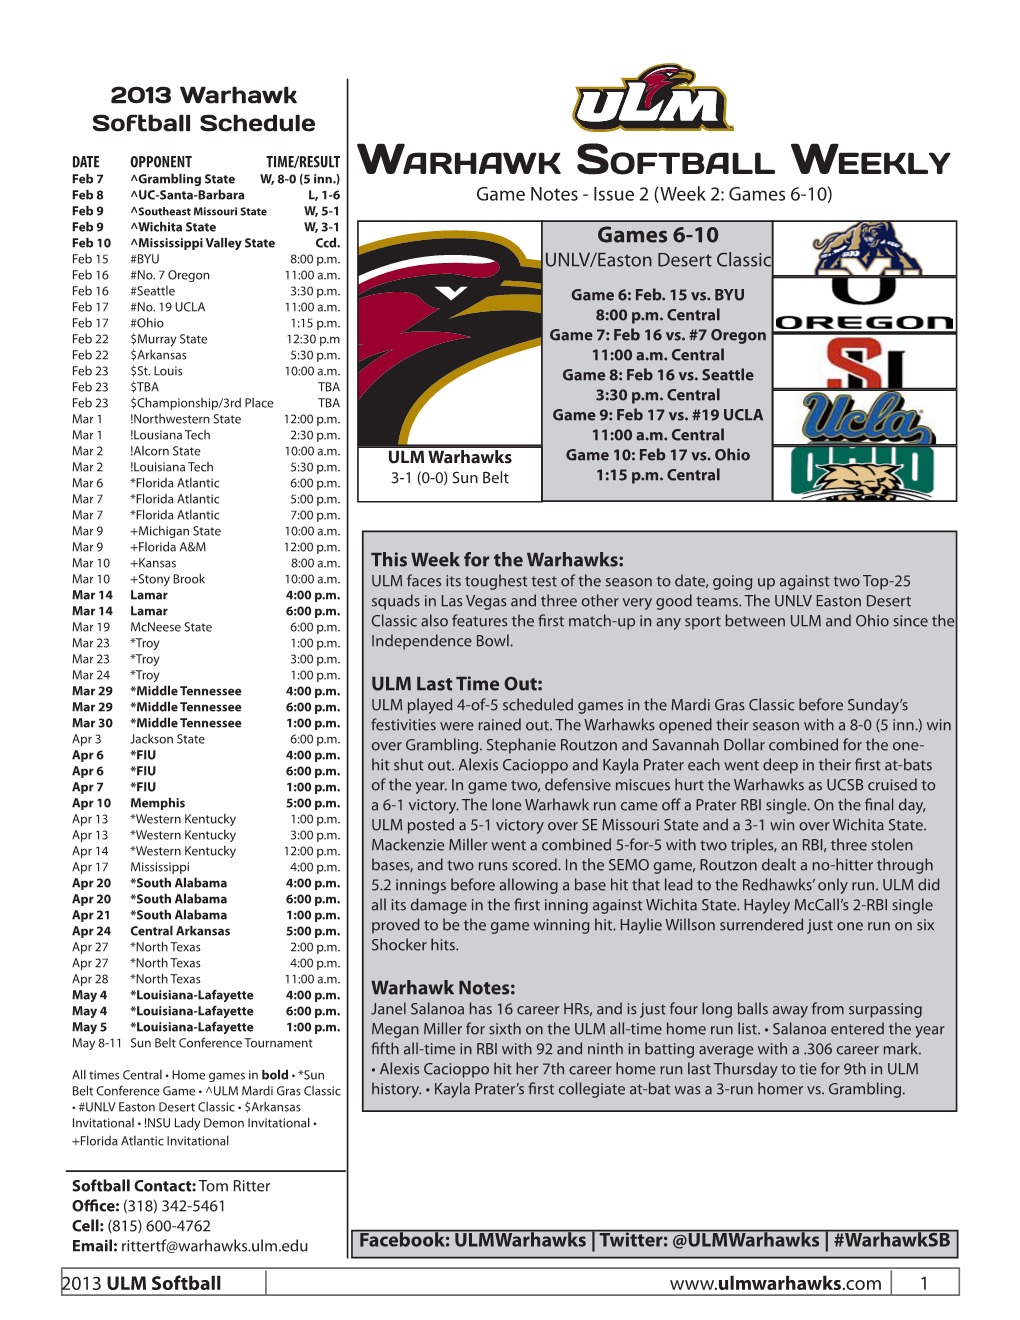 Warhawk Softball Weekly